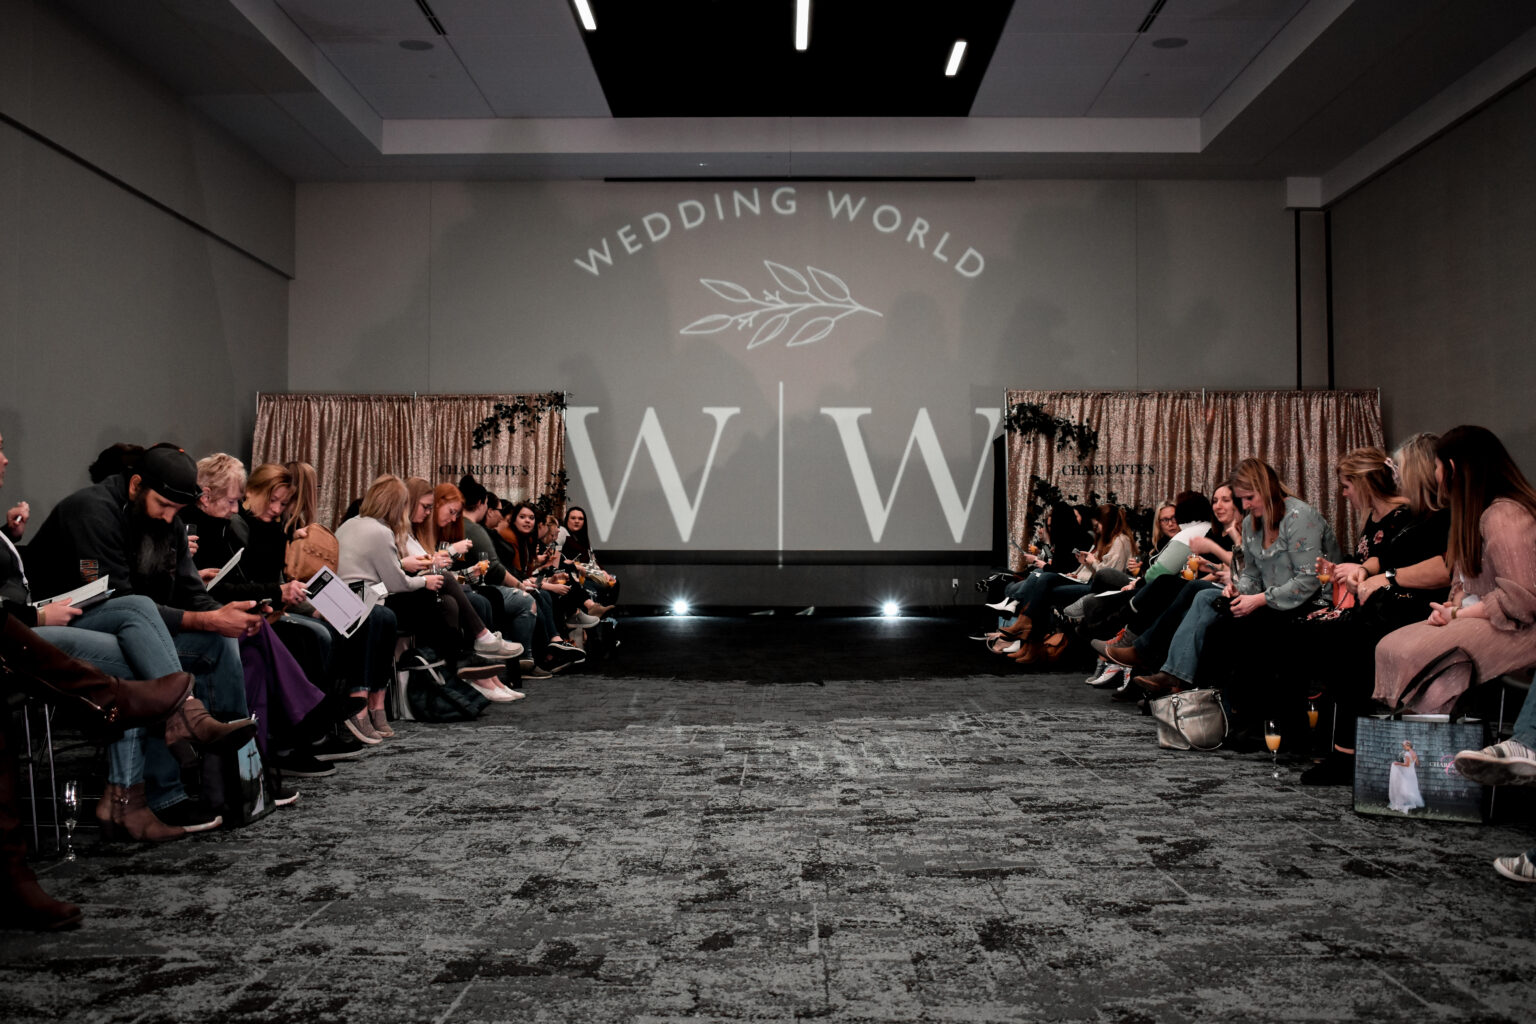 Wedding World 2022 bridal showcase